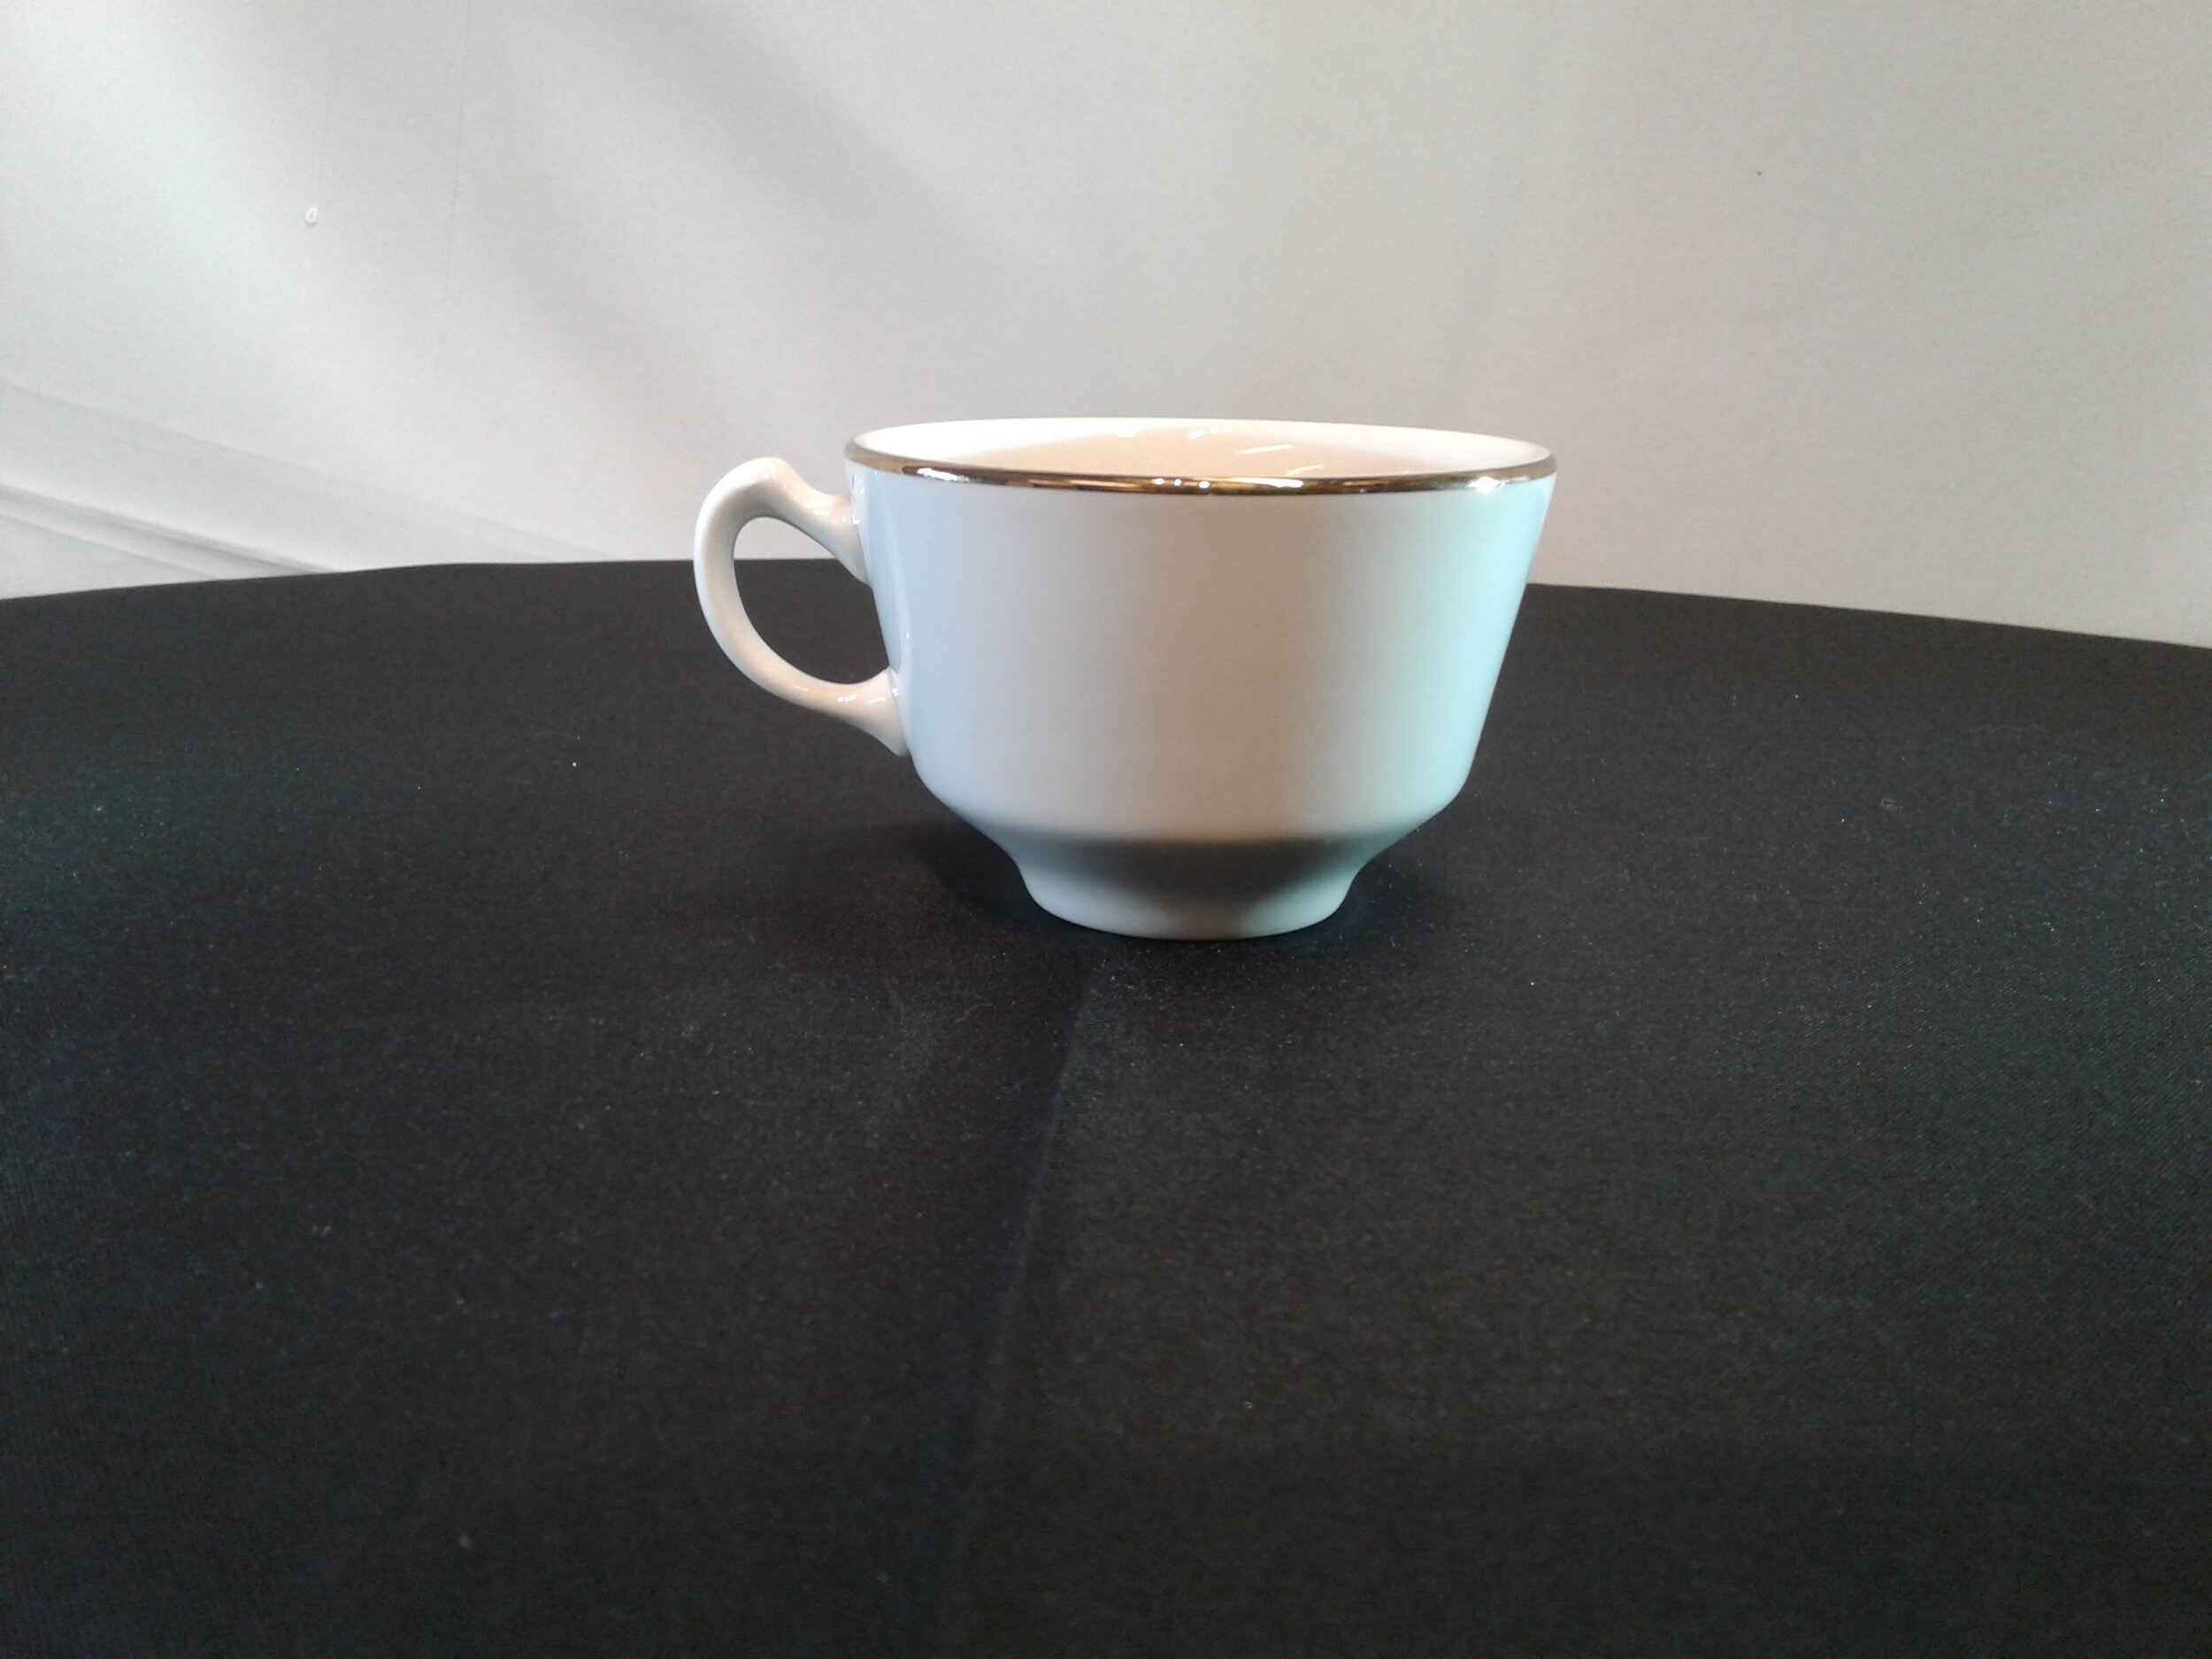 Gold Rim Coffee Mug, $1.30 / day